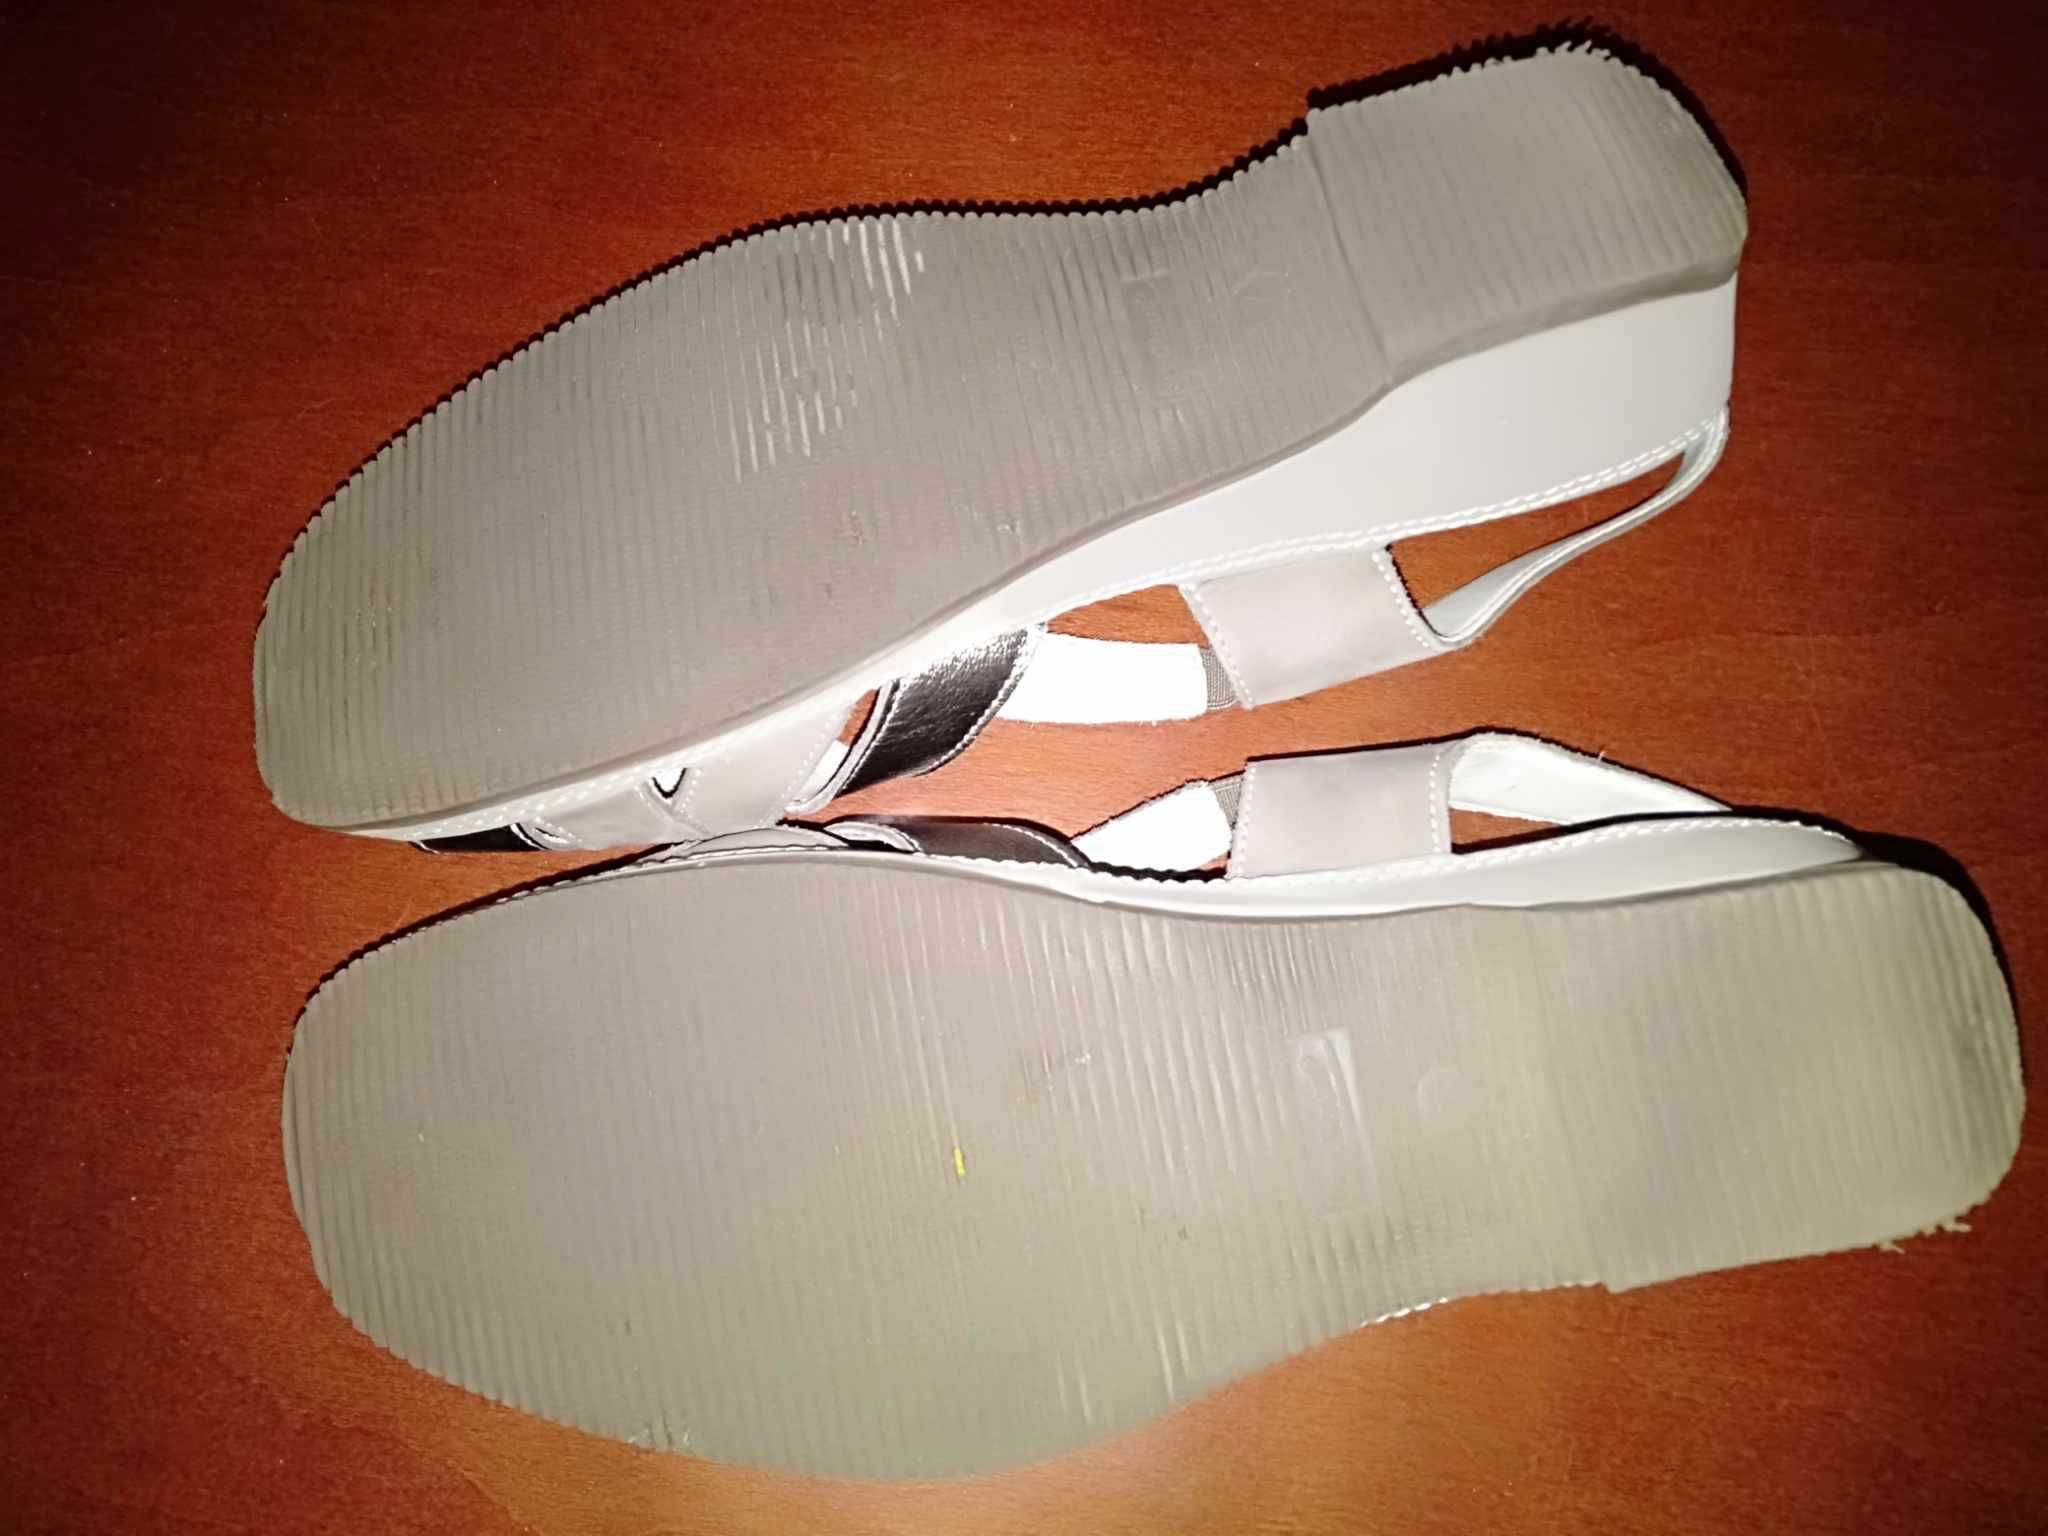 Szare srebrne sandały damskie Medicus 40 / 41 wkładka 26 cm tęgość G